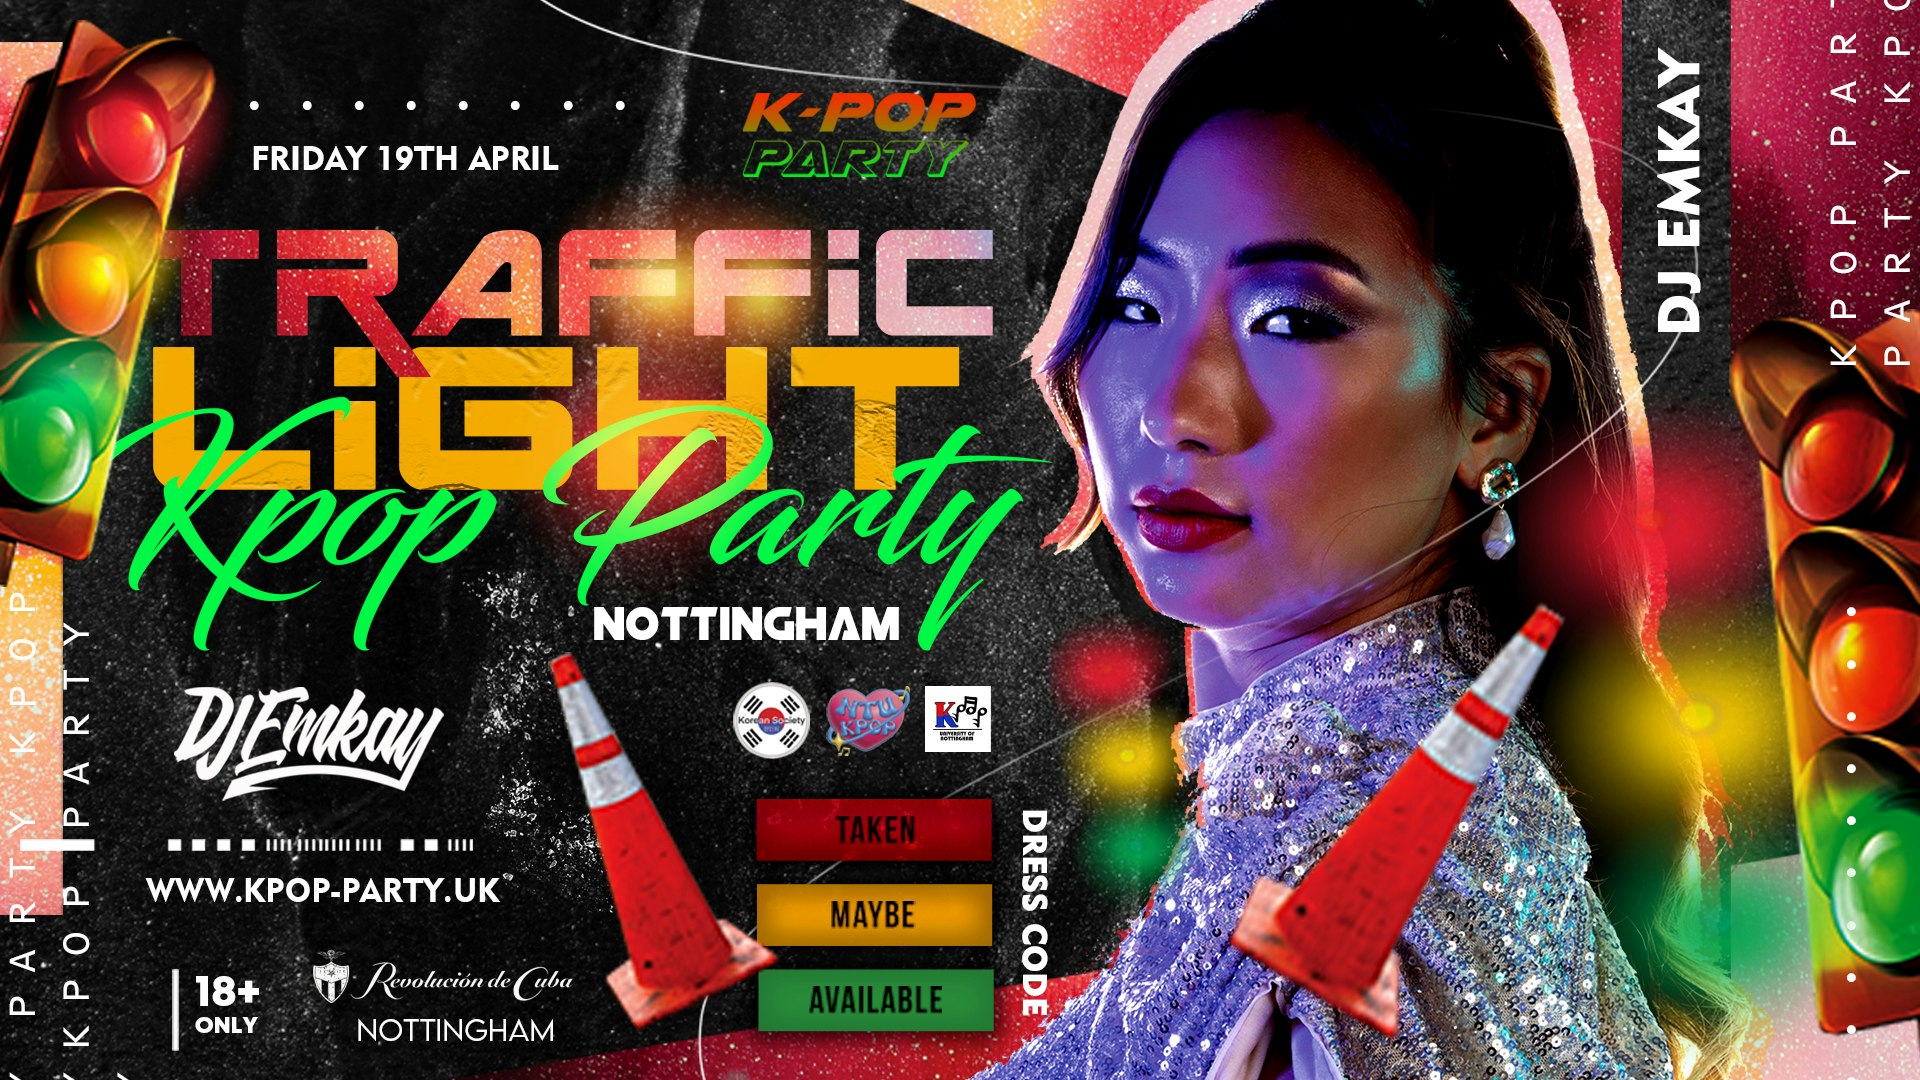 K-Pop TRAFFIC LIGHT Party Nottingham with DJ EMKAY | Friday 19th April